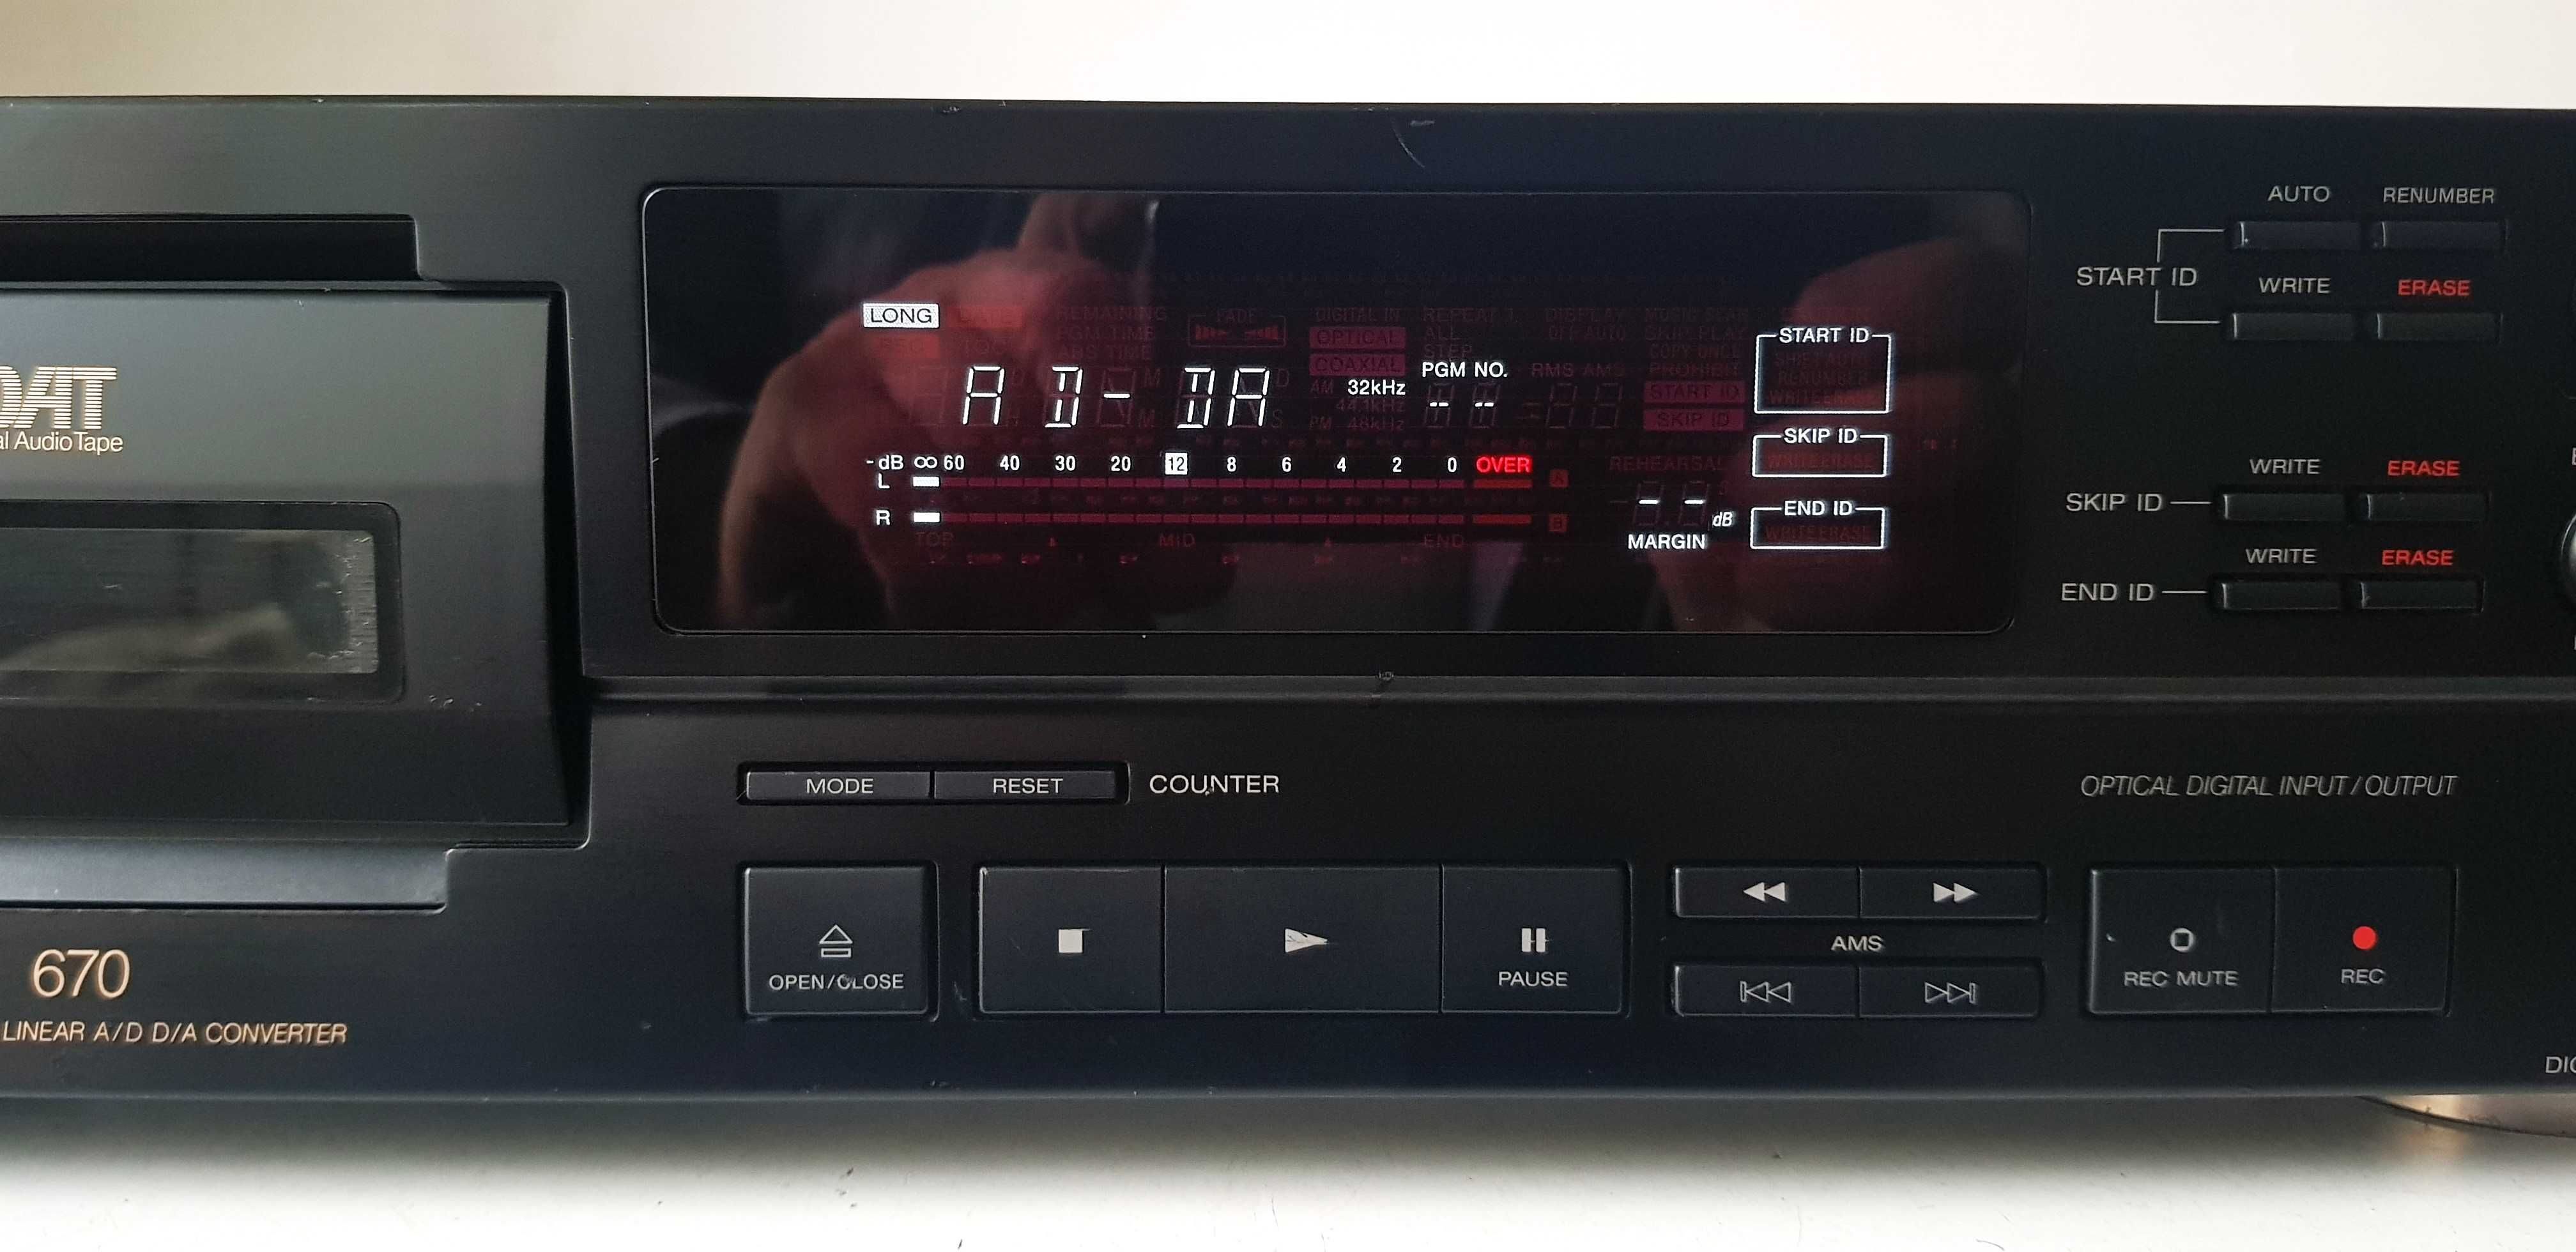 Sony DTC 670 muzica la tape digital caseta DAT muzica arta colectie